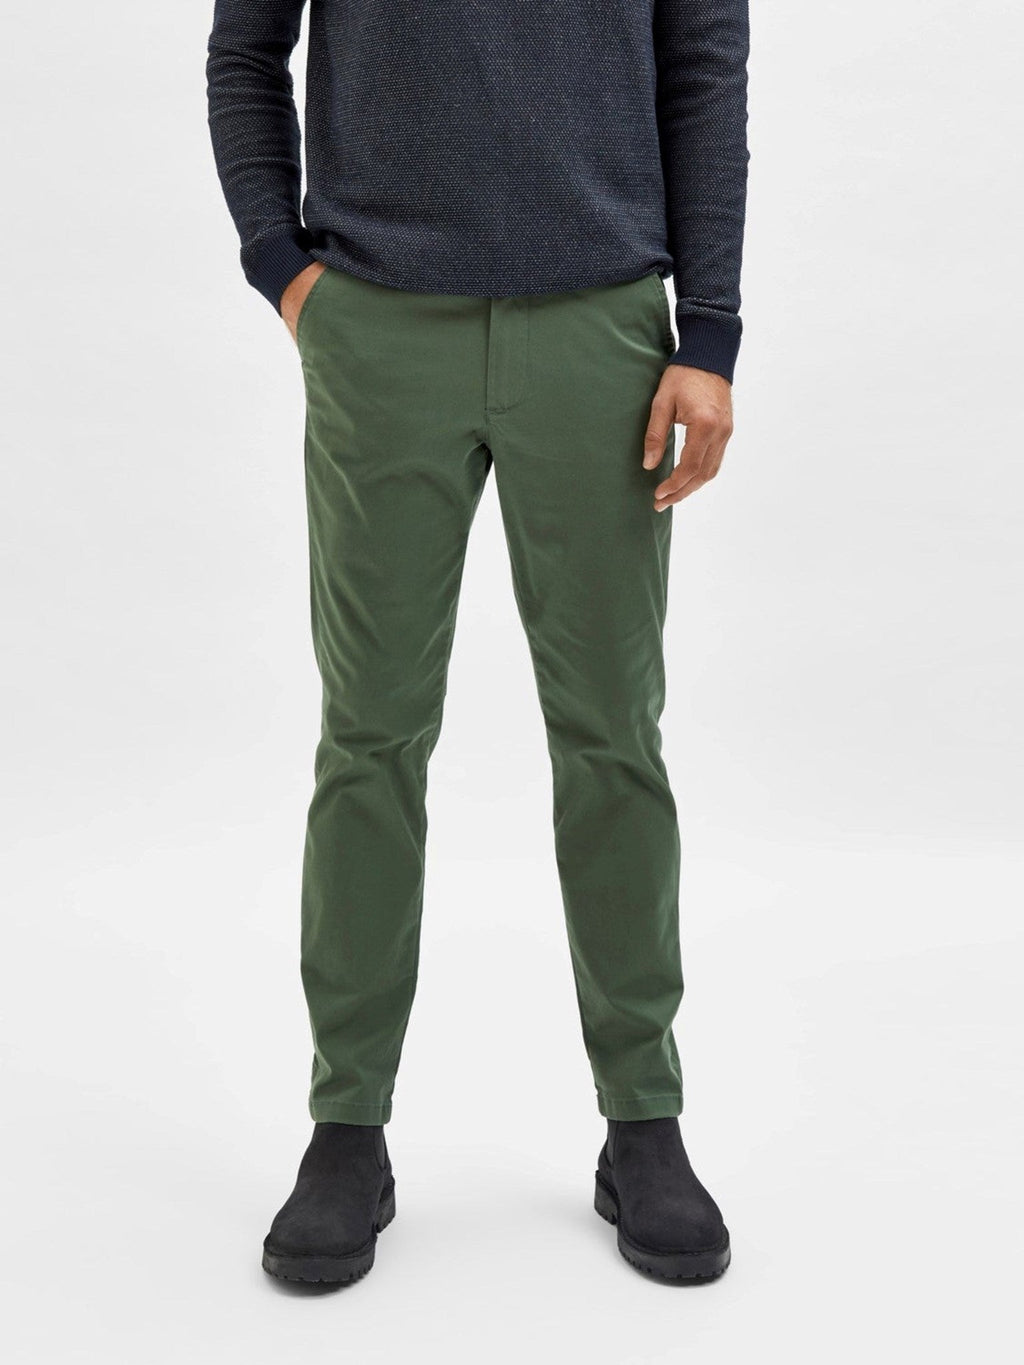 Miglia Flex Chino Pants - Bronze Green (Cotton Organic Cotton)